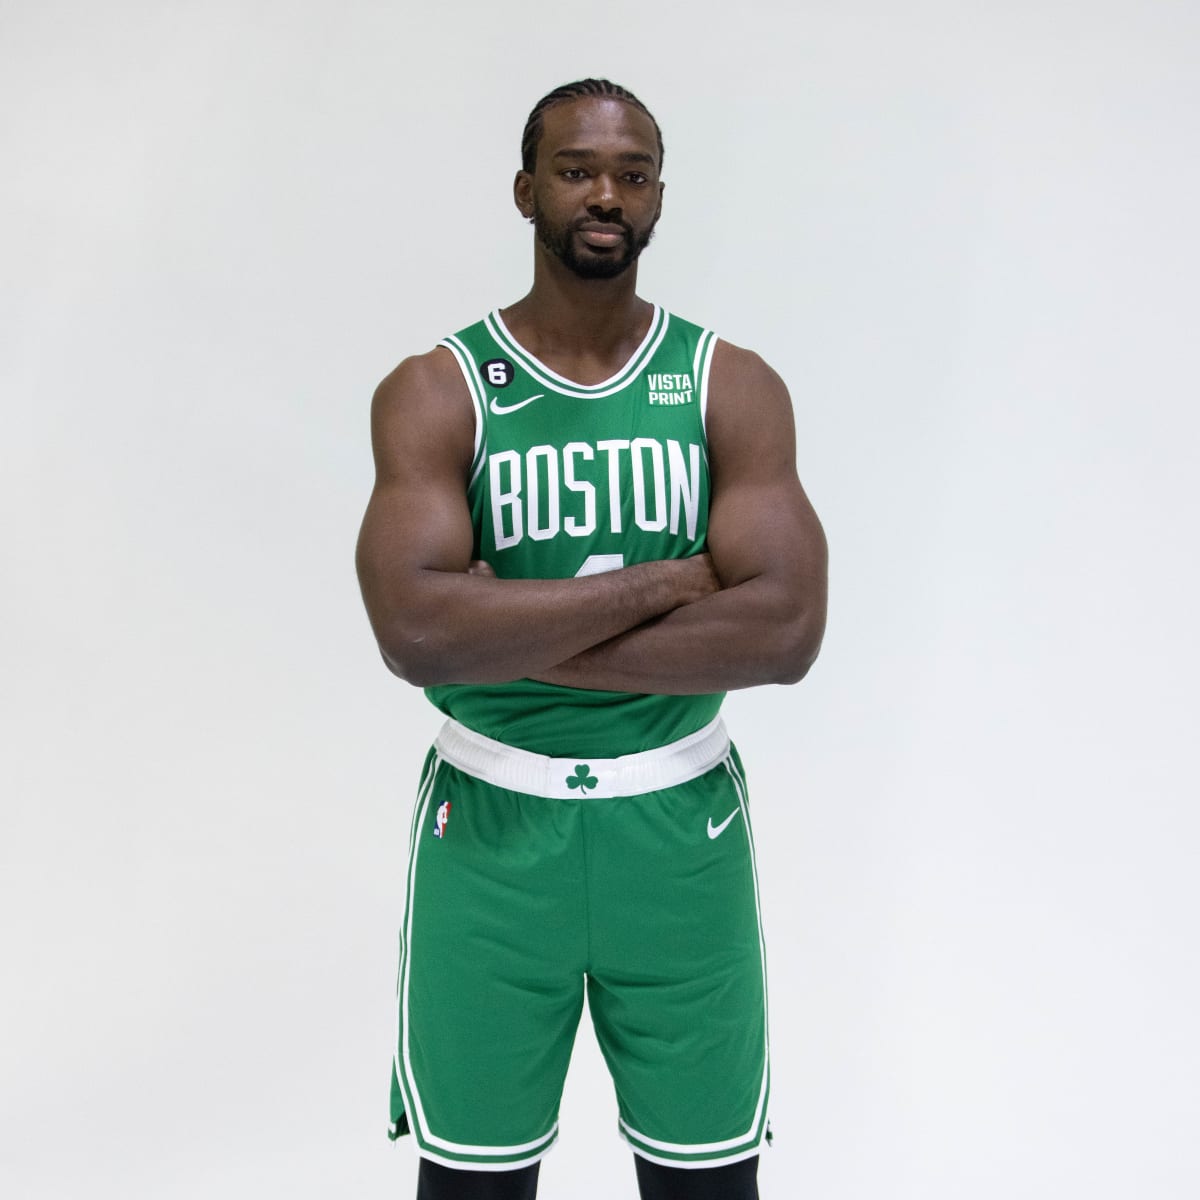 Mass. native Vonleh earns spot on Celtics roster, ESPN reports